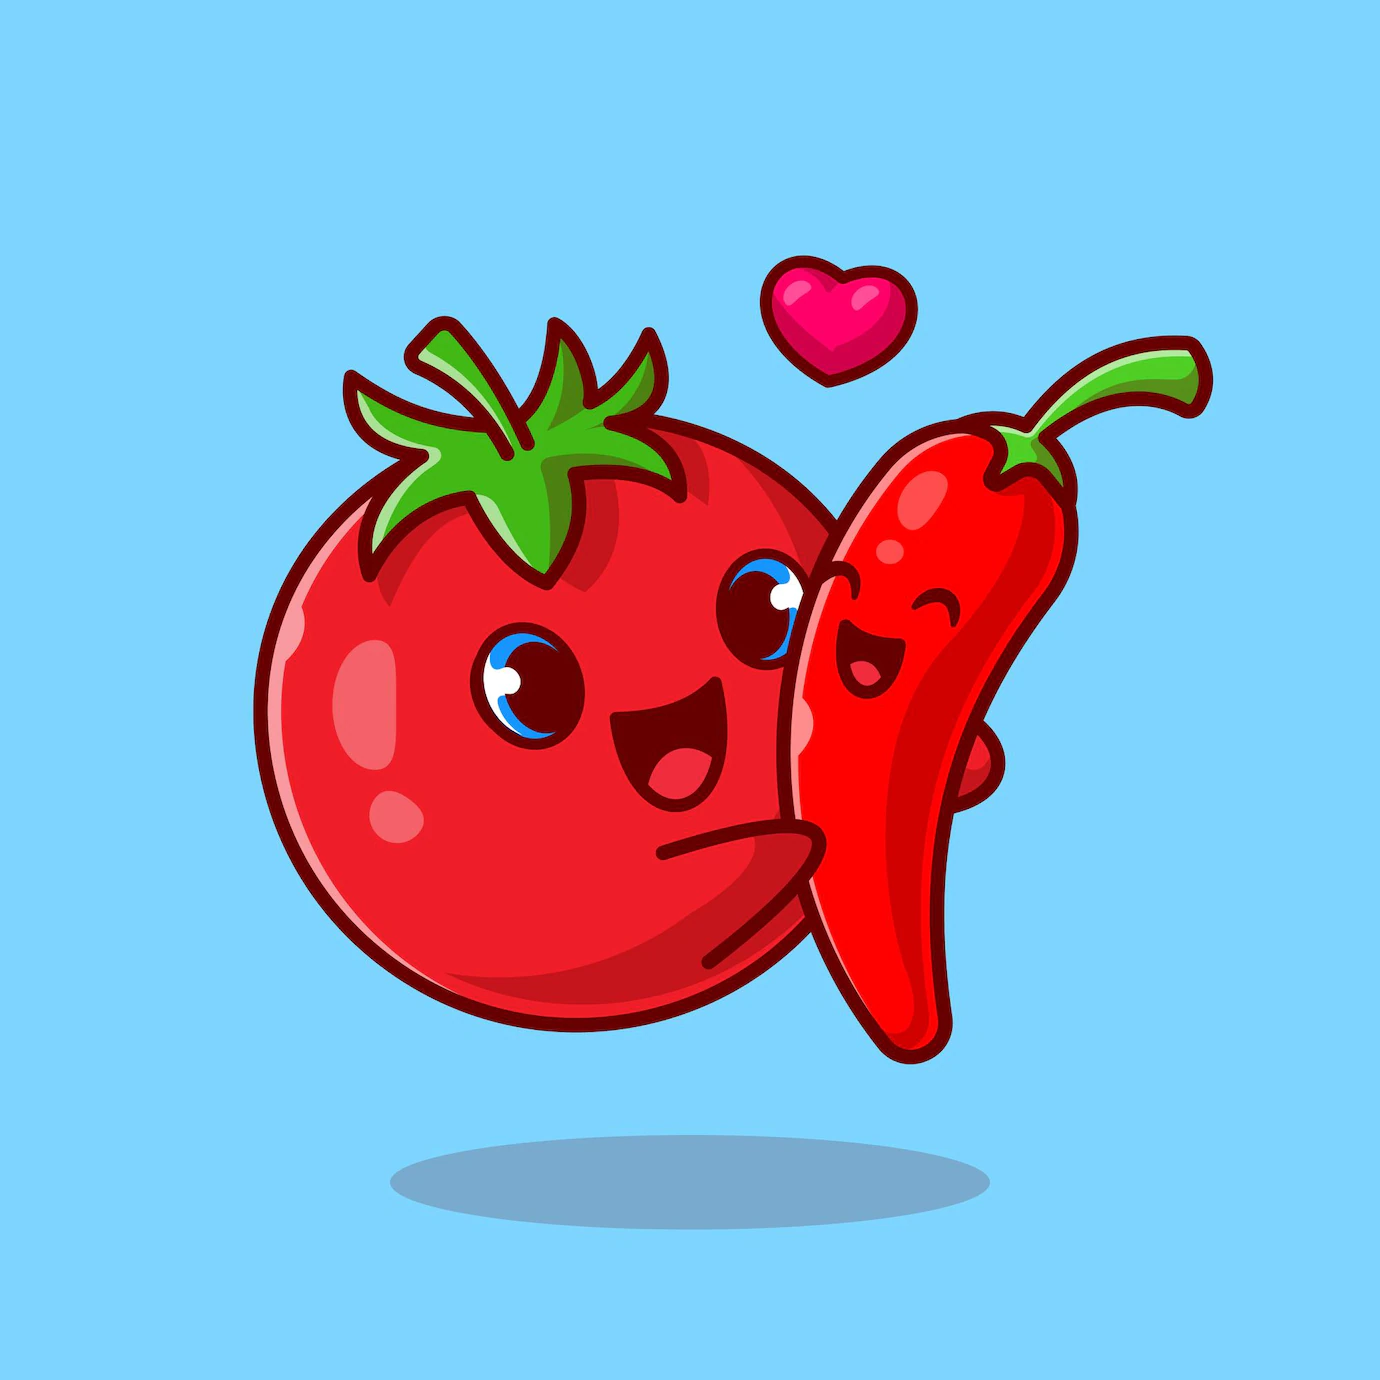 Cute Tomato Hug Chili Couple Cartoon 138676 2966